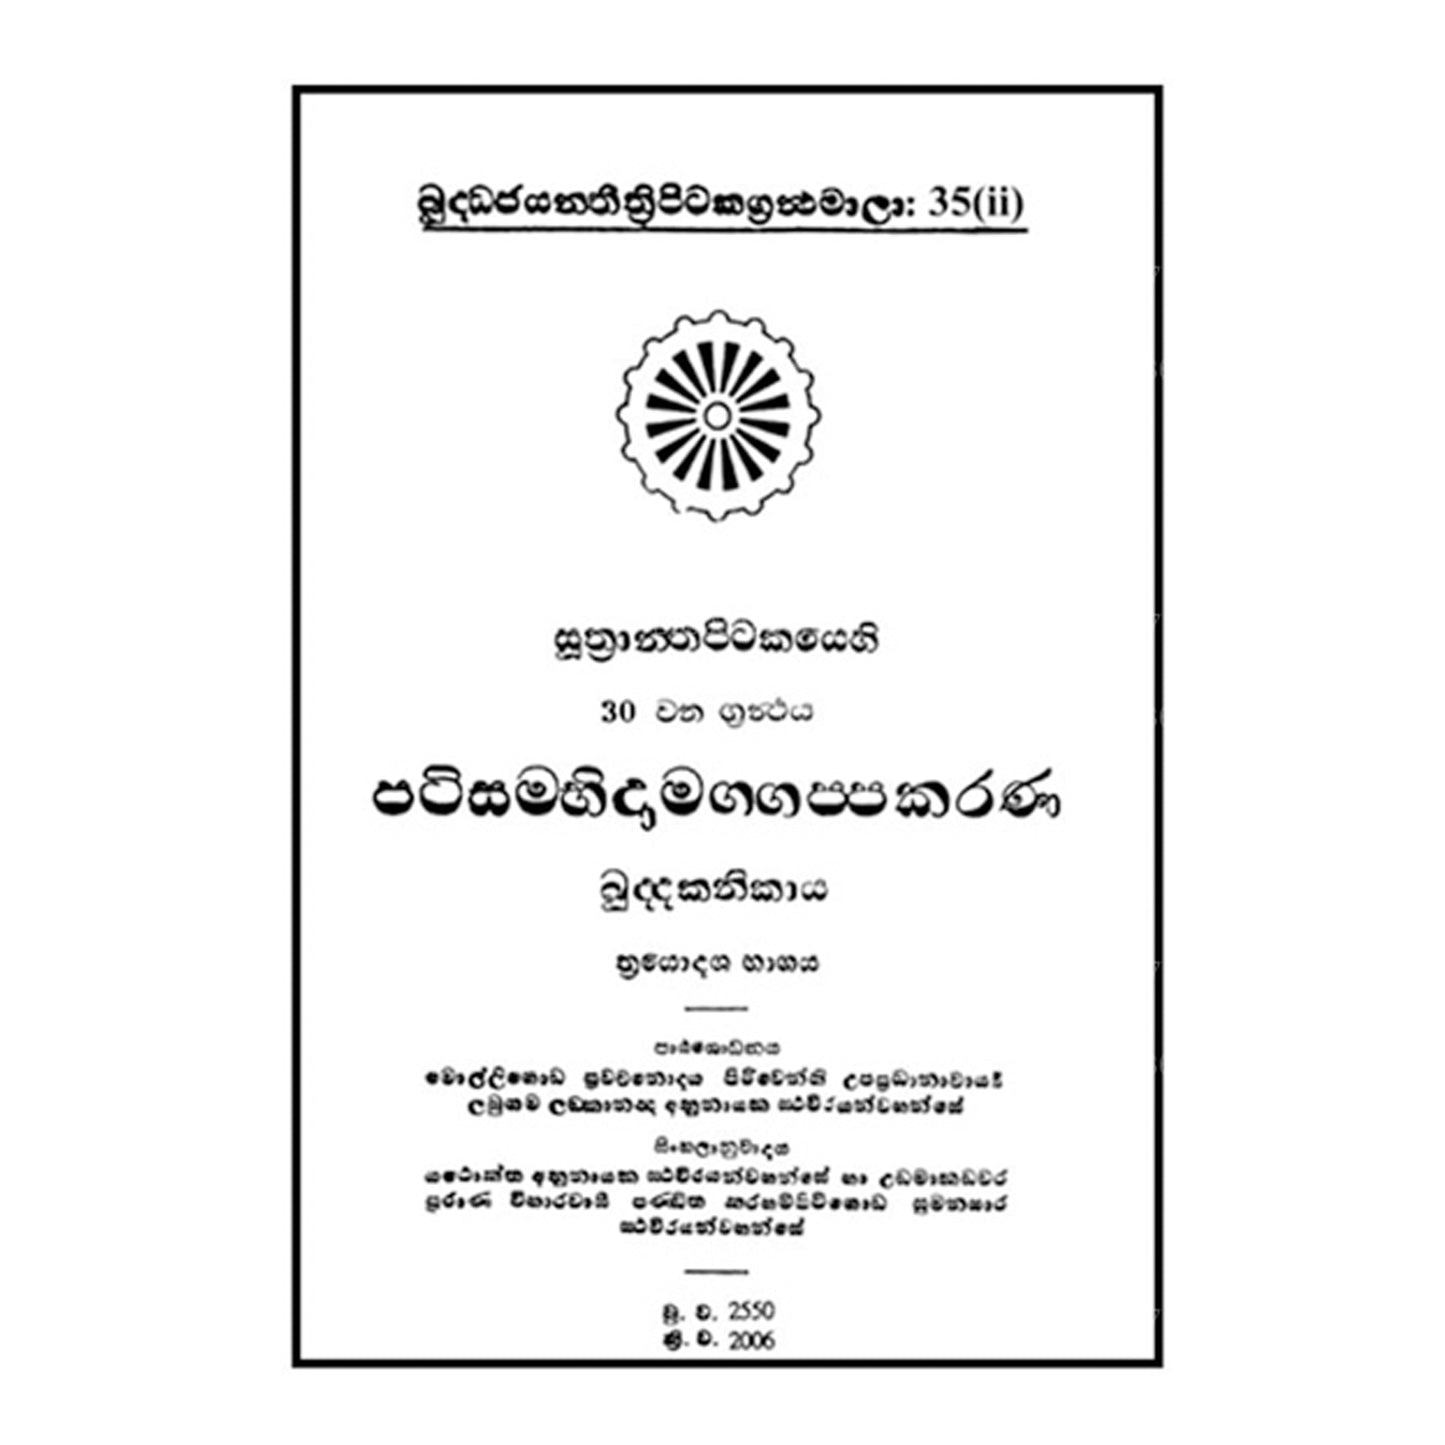 Suthra Pitakaya - Patisambhidamagga 2